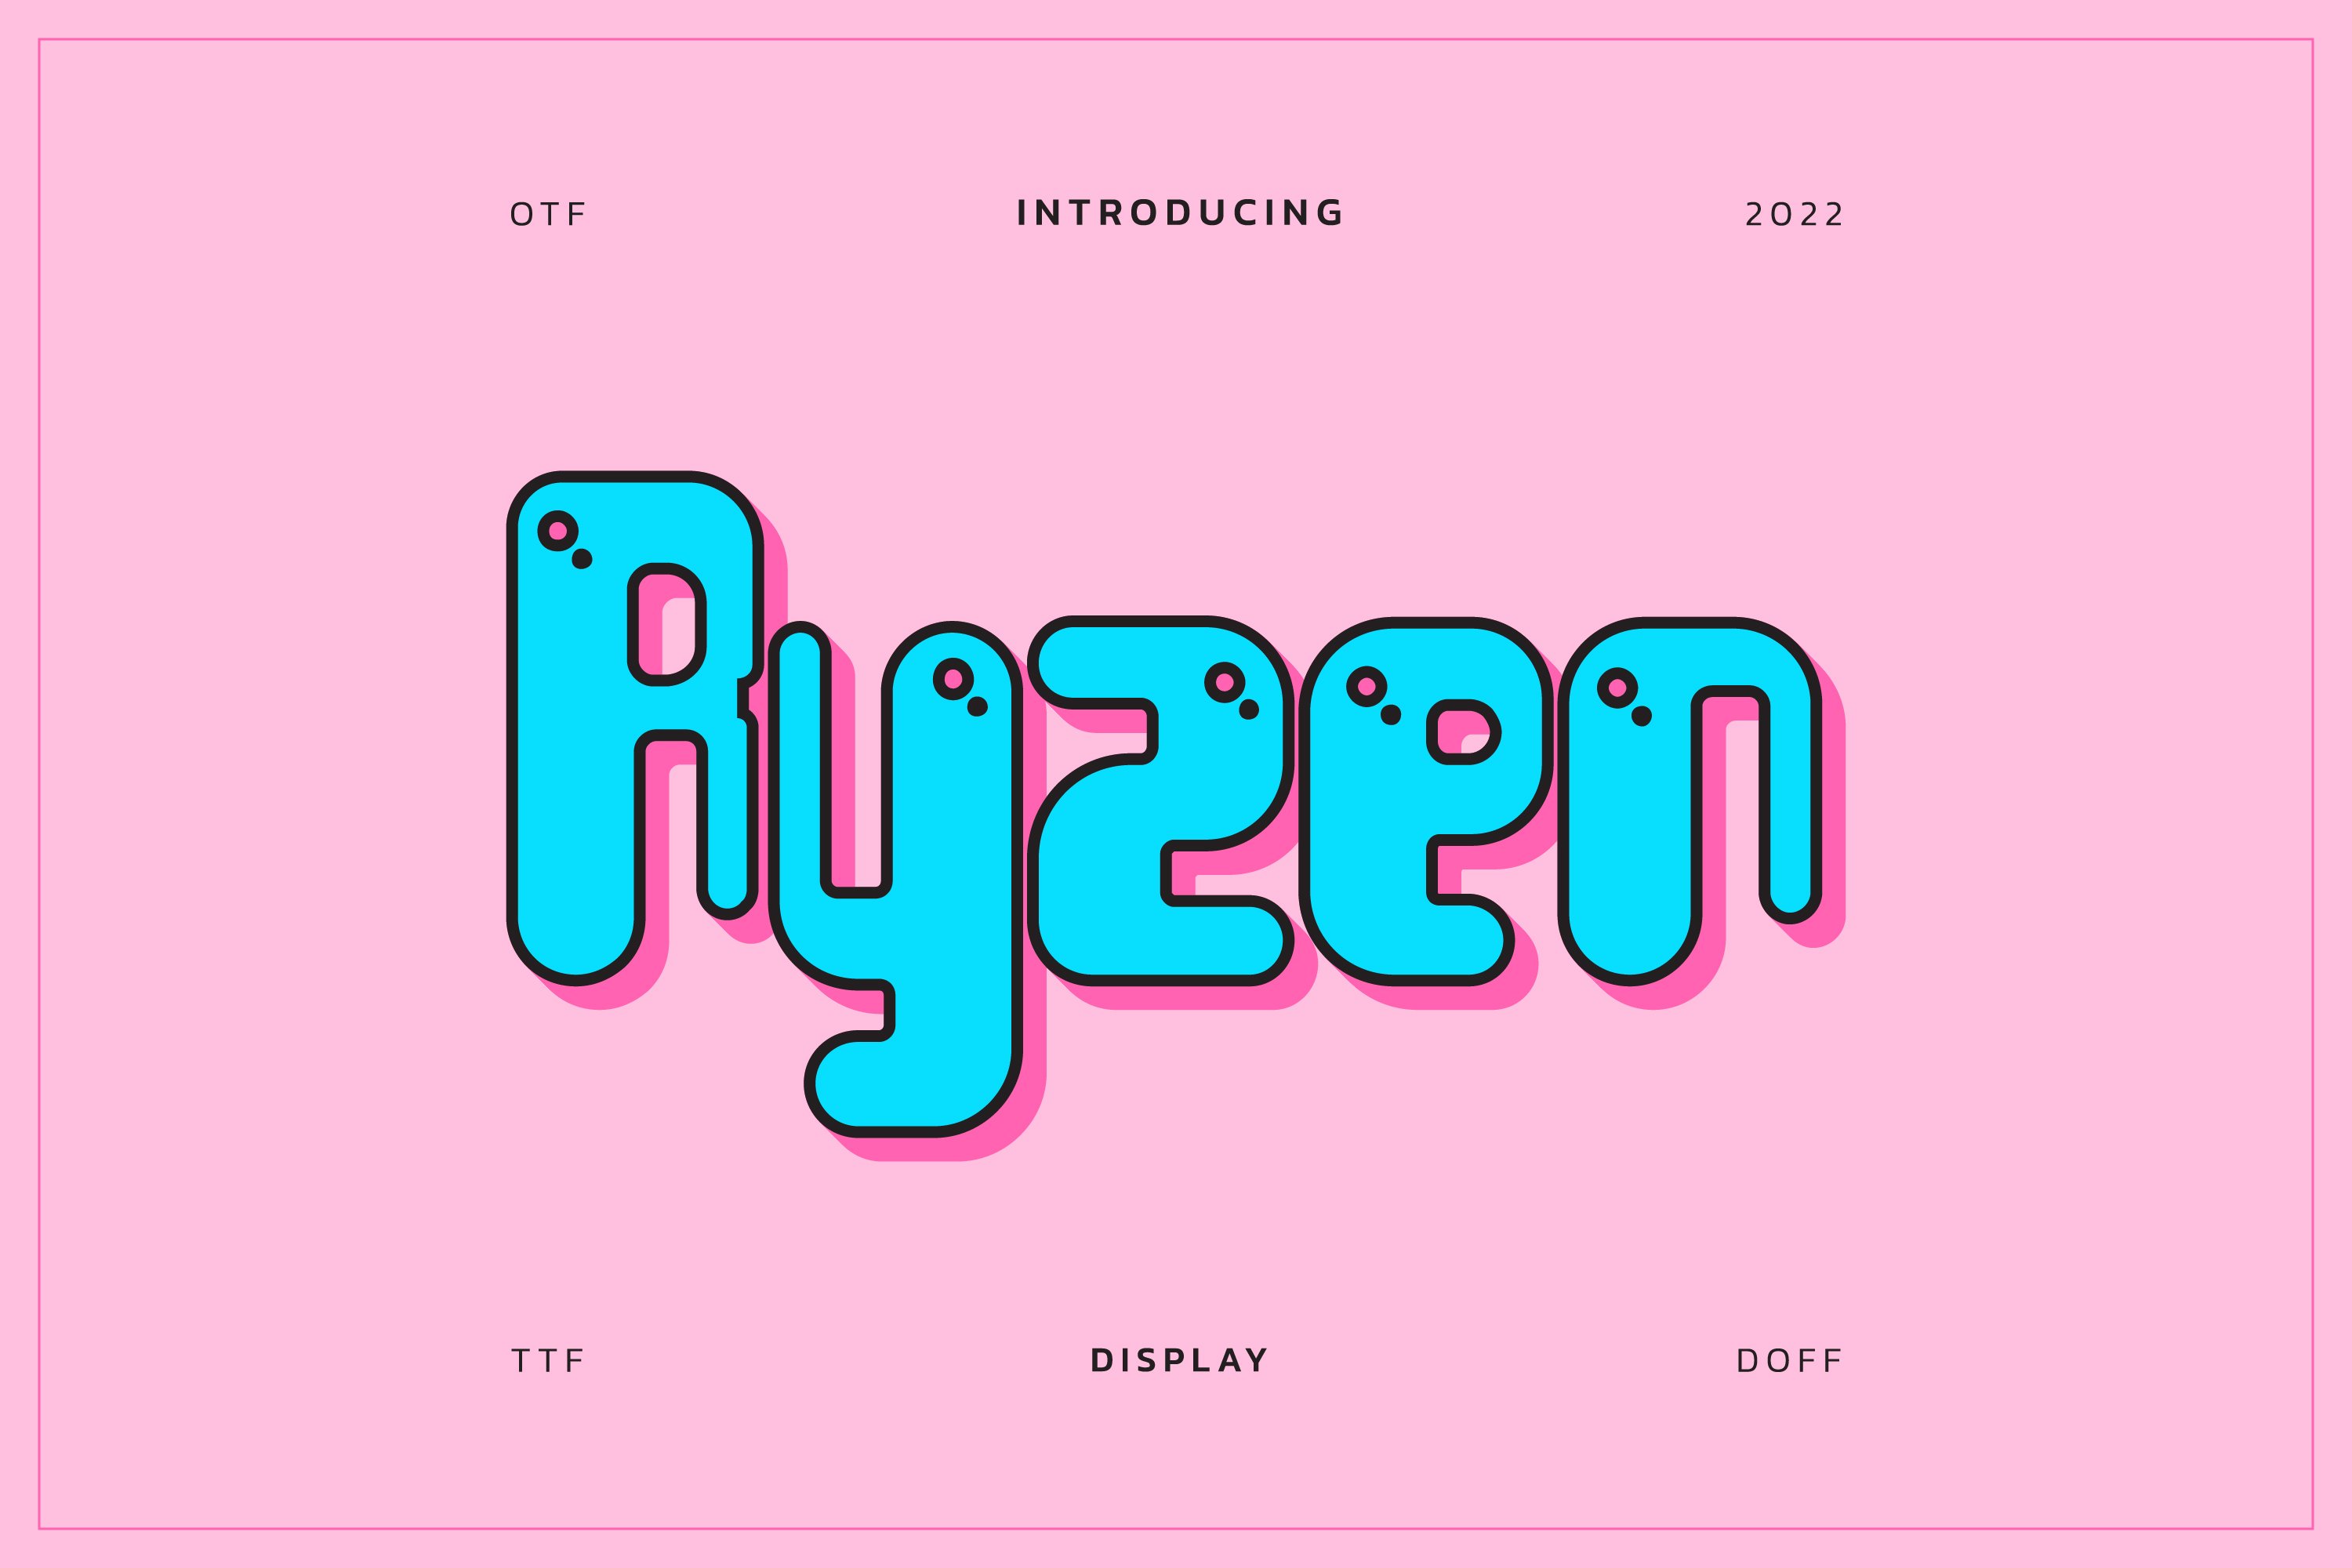 Ryzen Fun Display Font cover image.